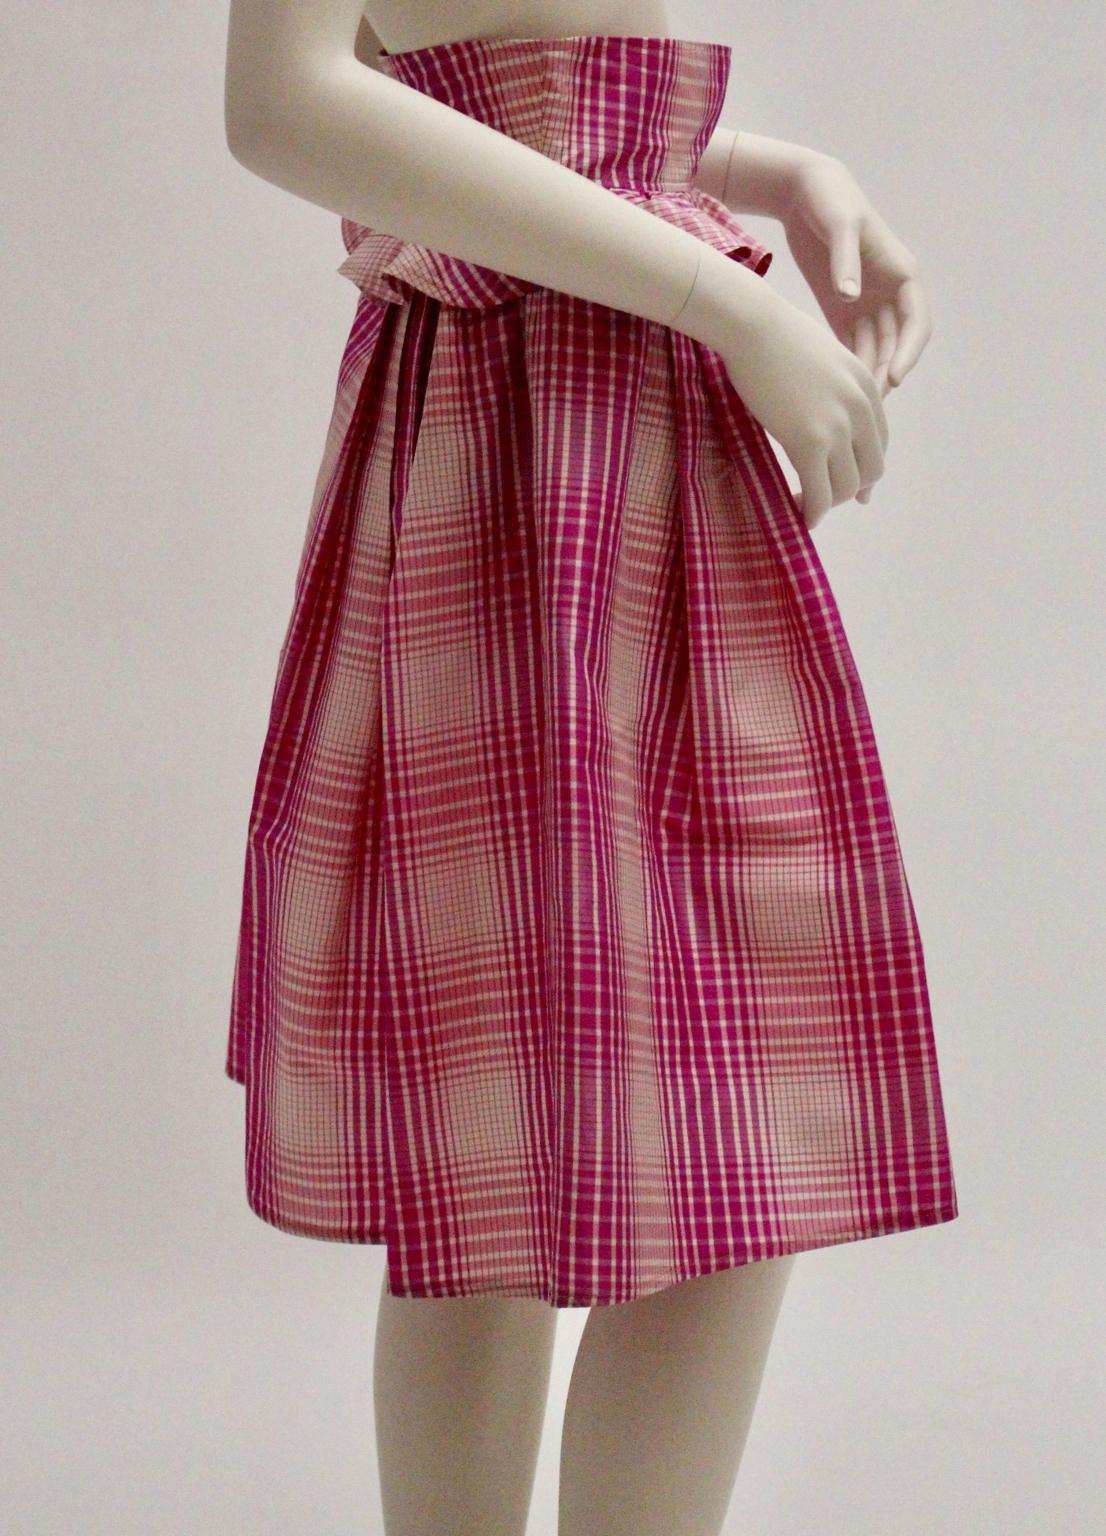 Silk Pink White Checker Vintage High Waist Skirt by Emanuel Ungaro 1980s Paris For Sale 5